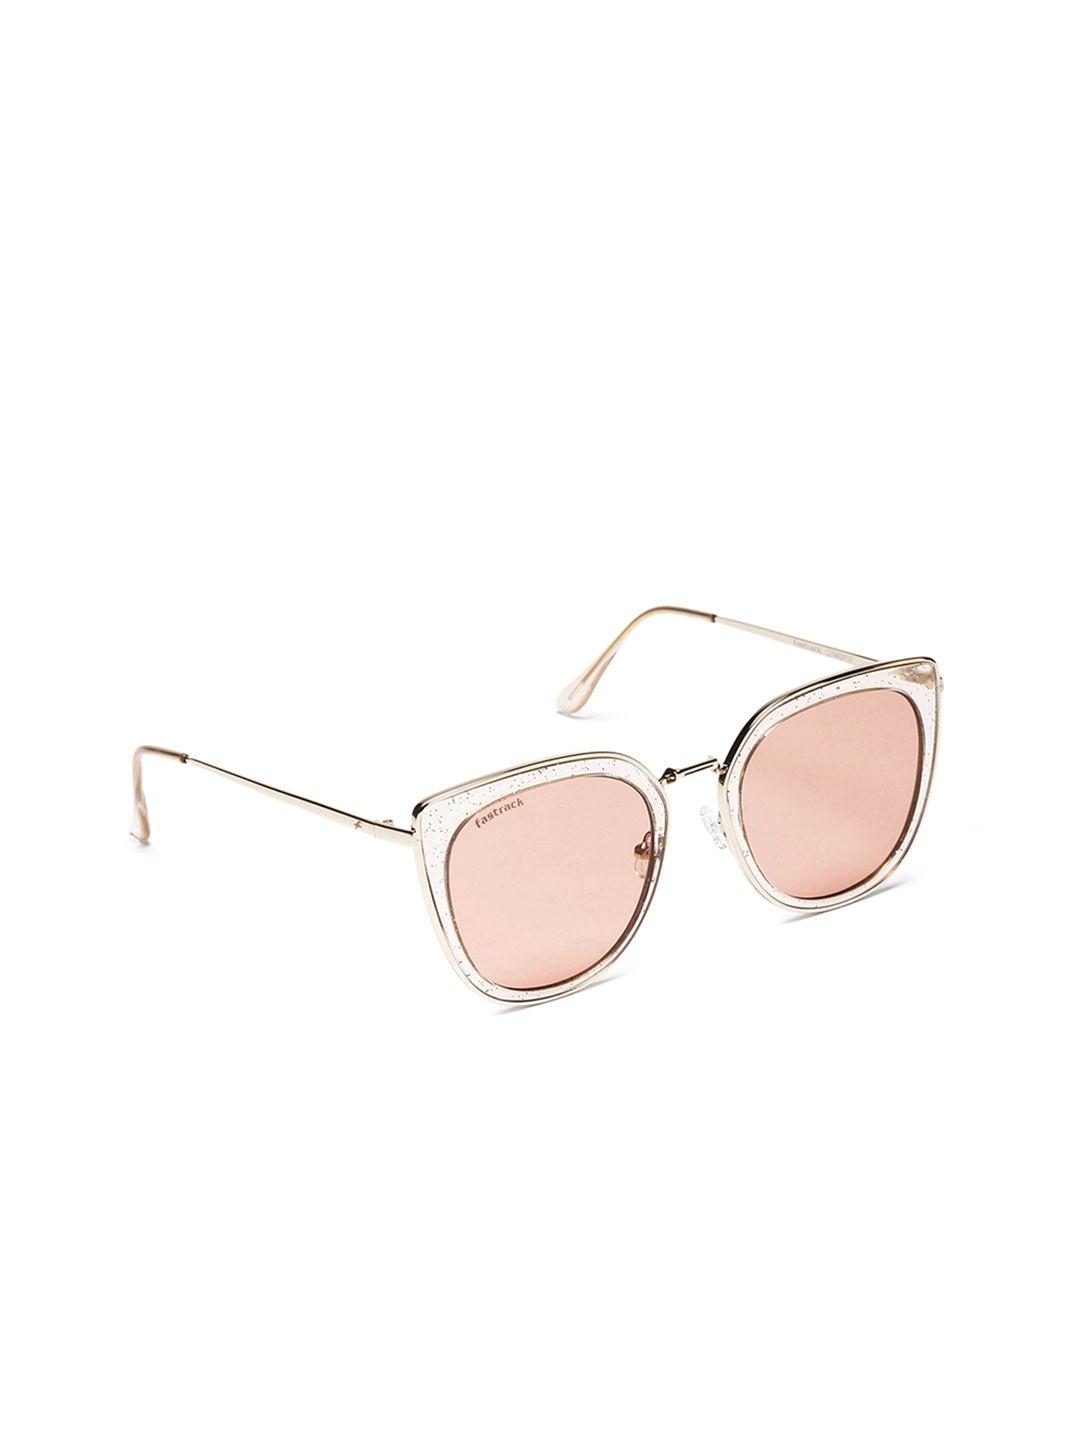 fastrack women oval sunglasses c094br1f